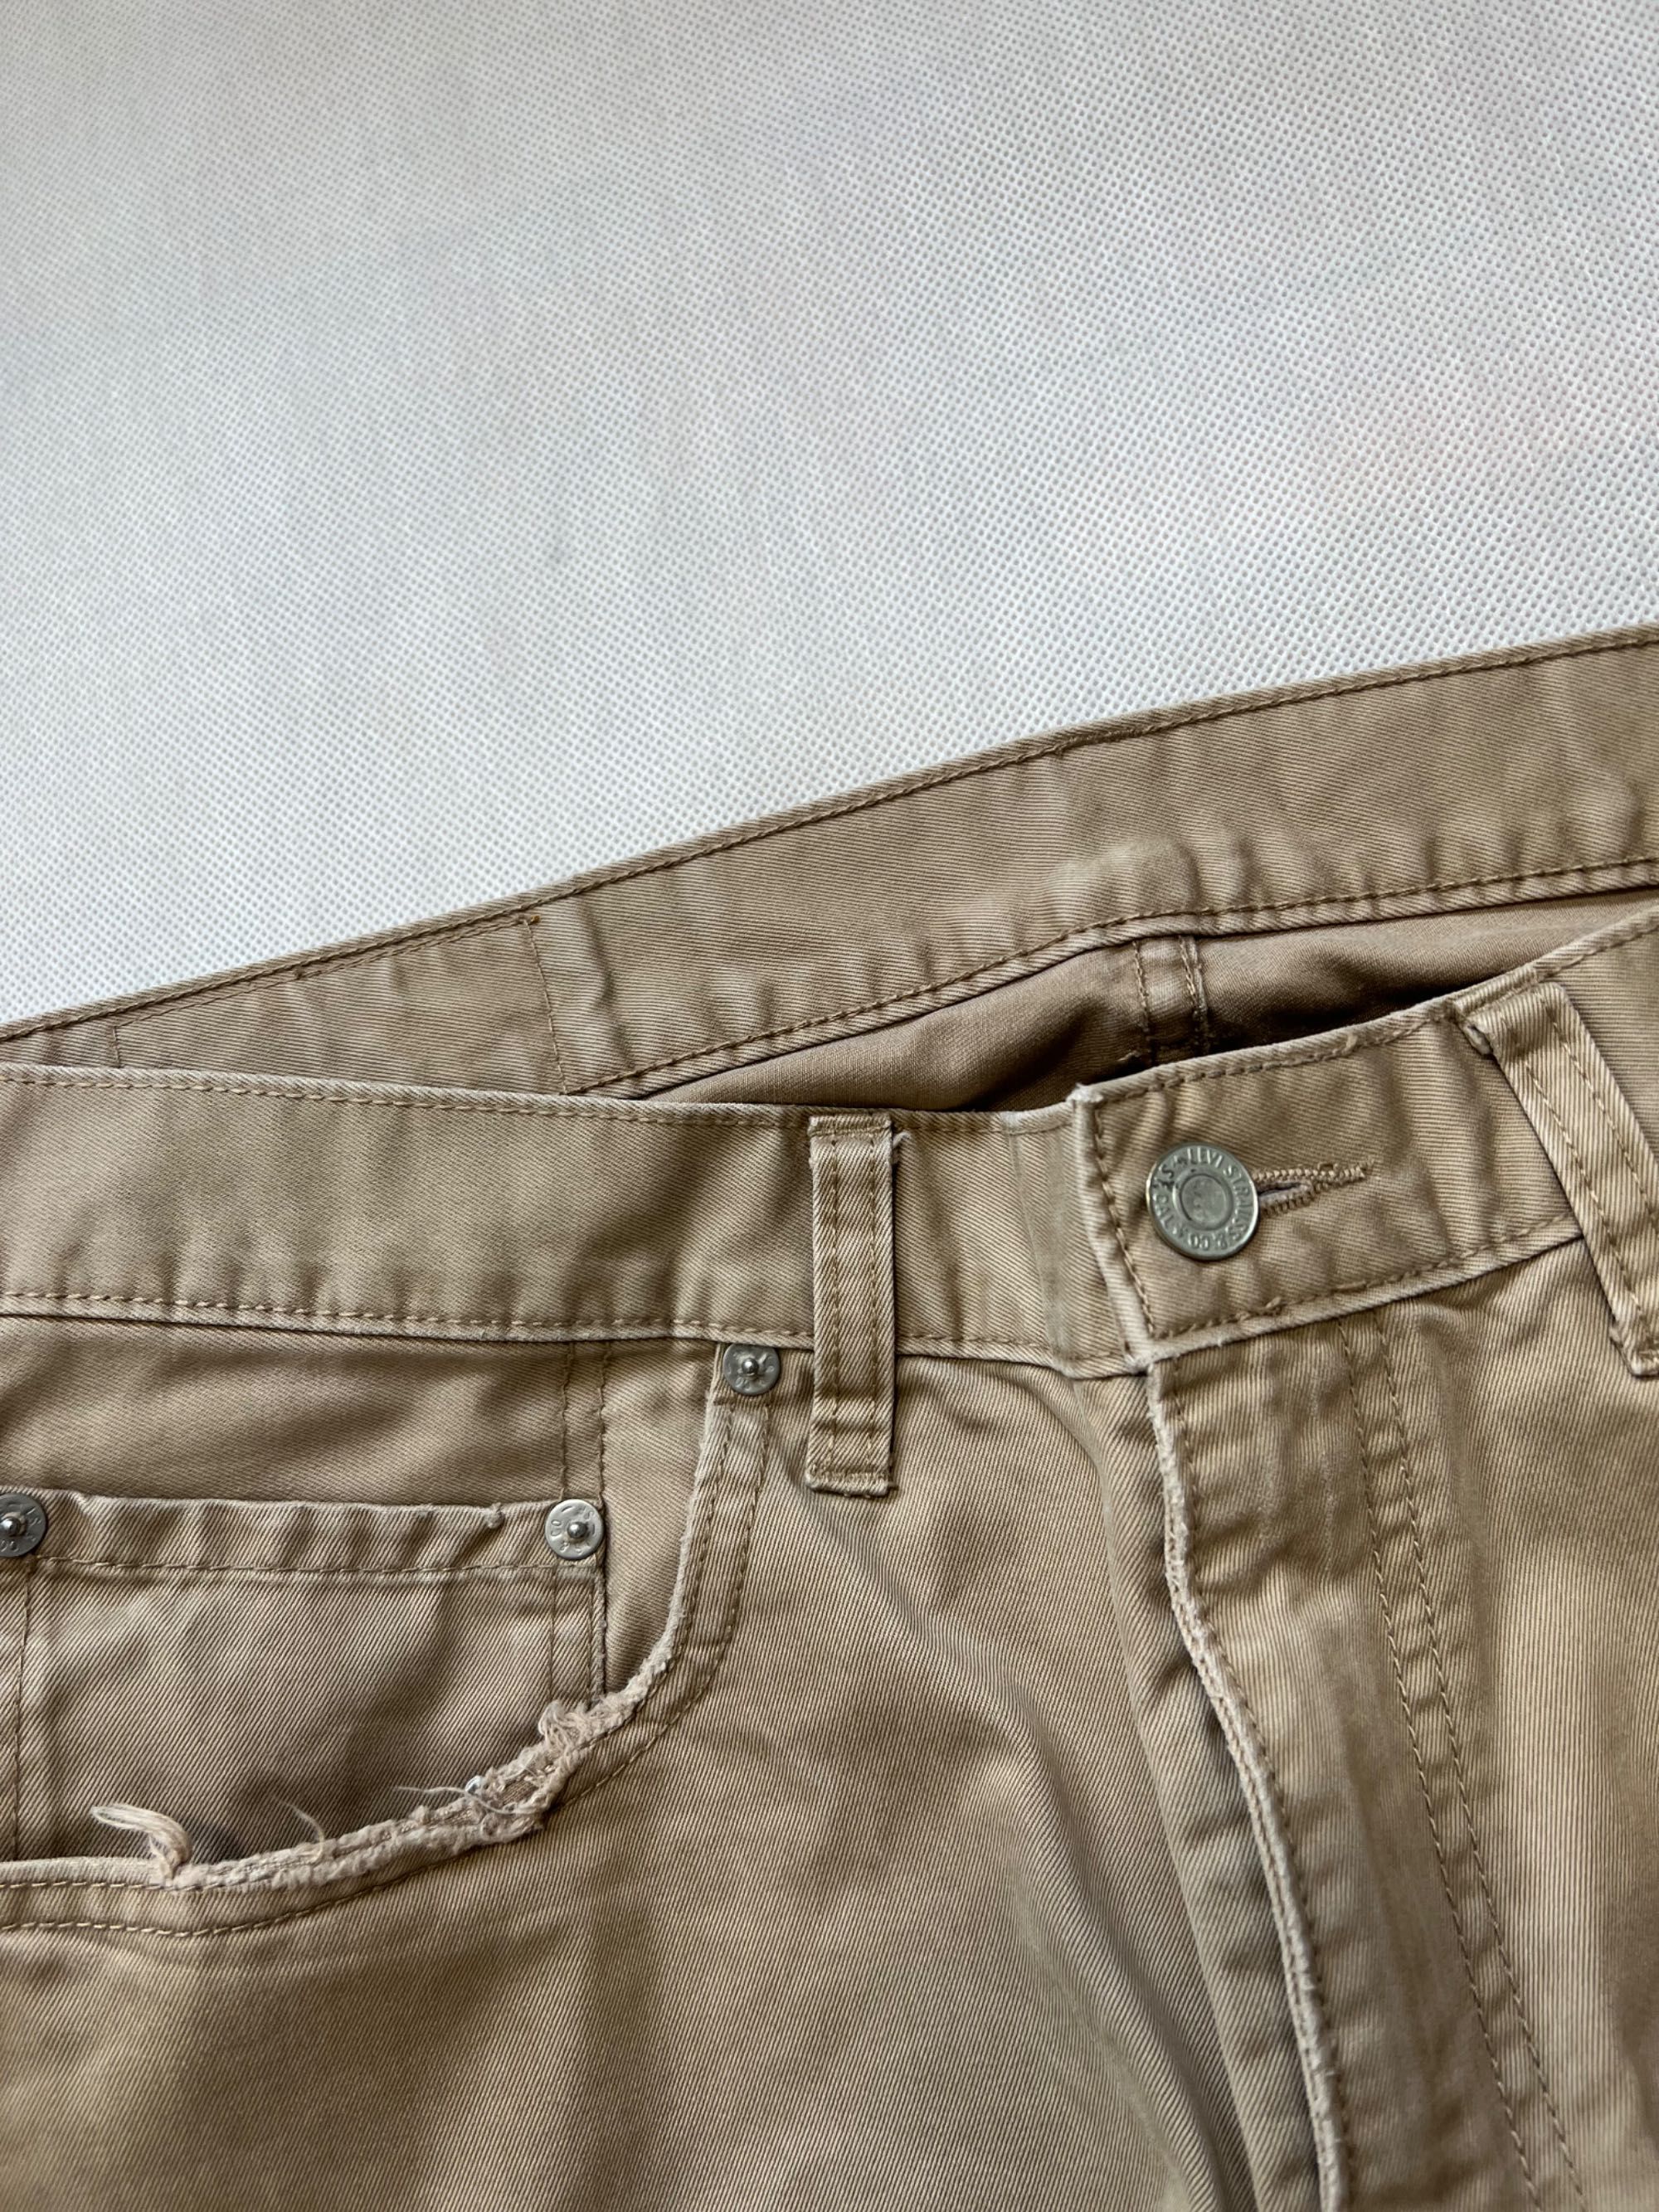 Trousers Levi’s 752 vintage great fit